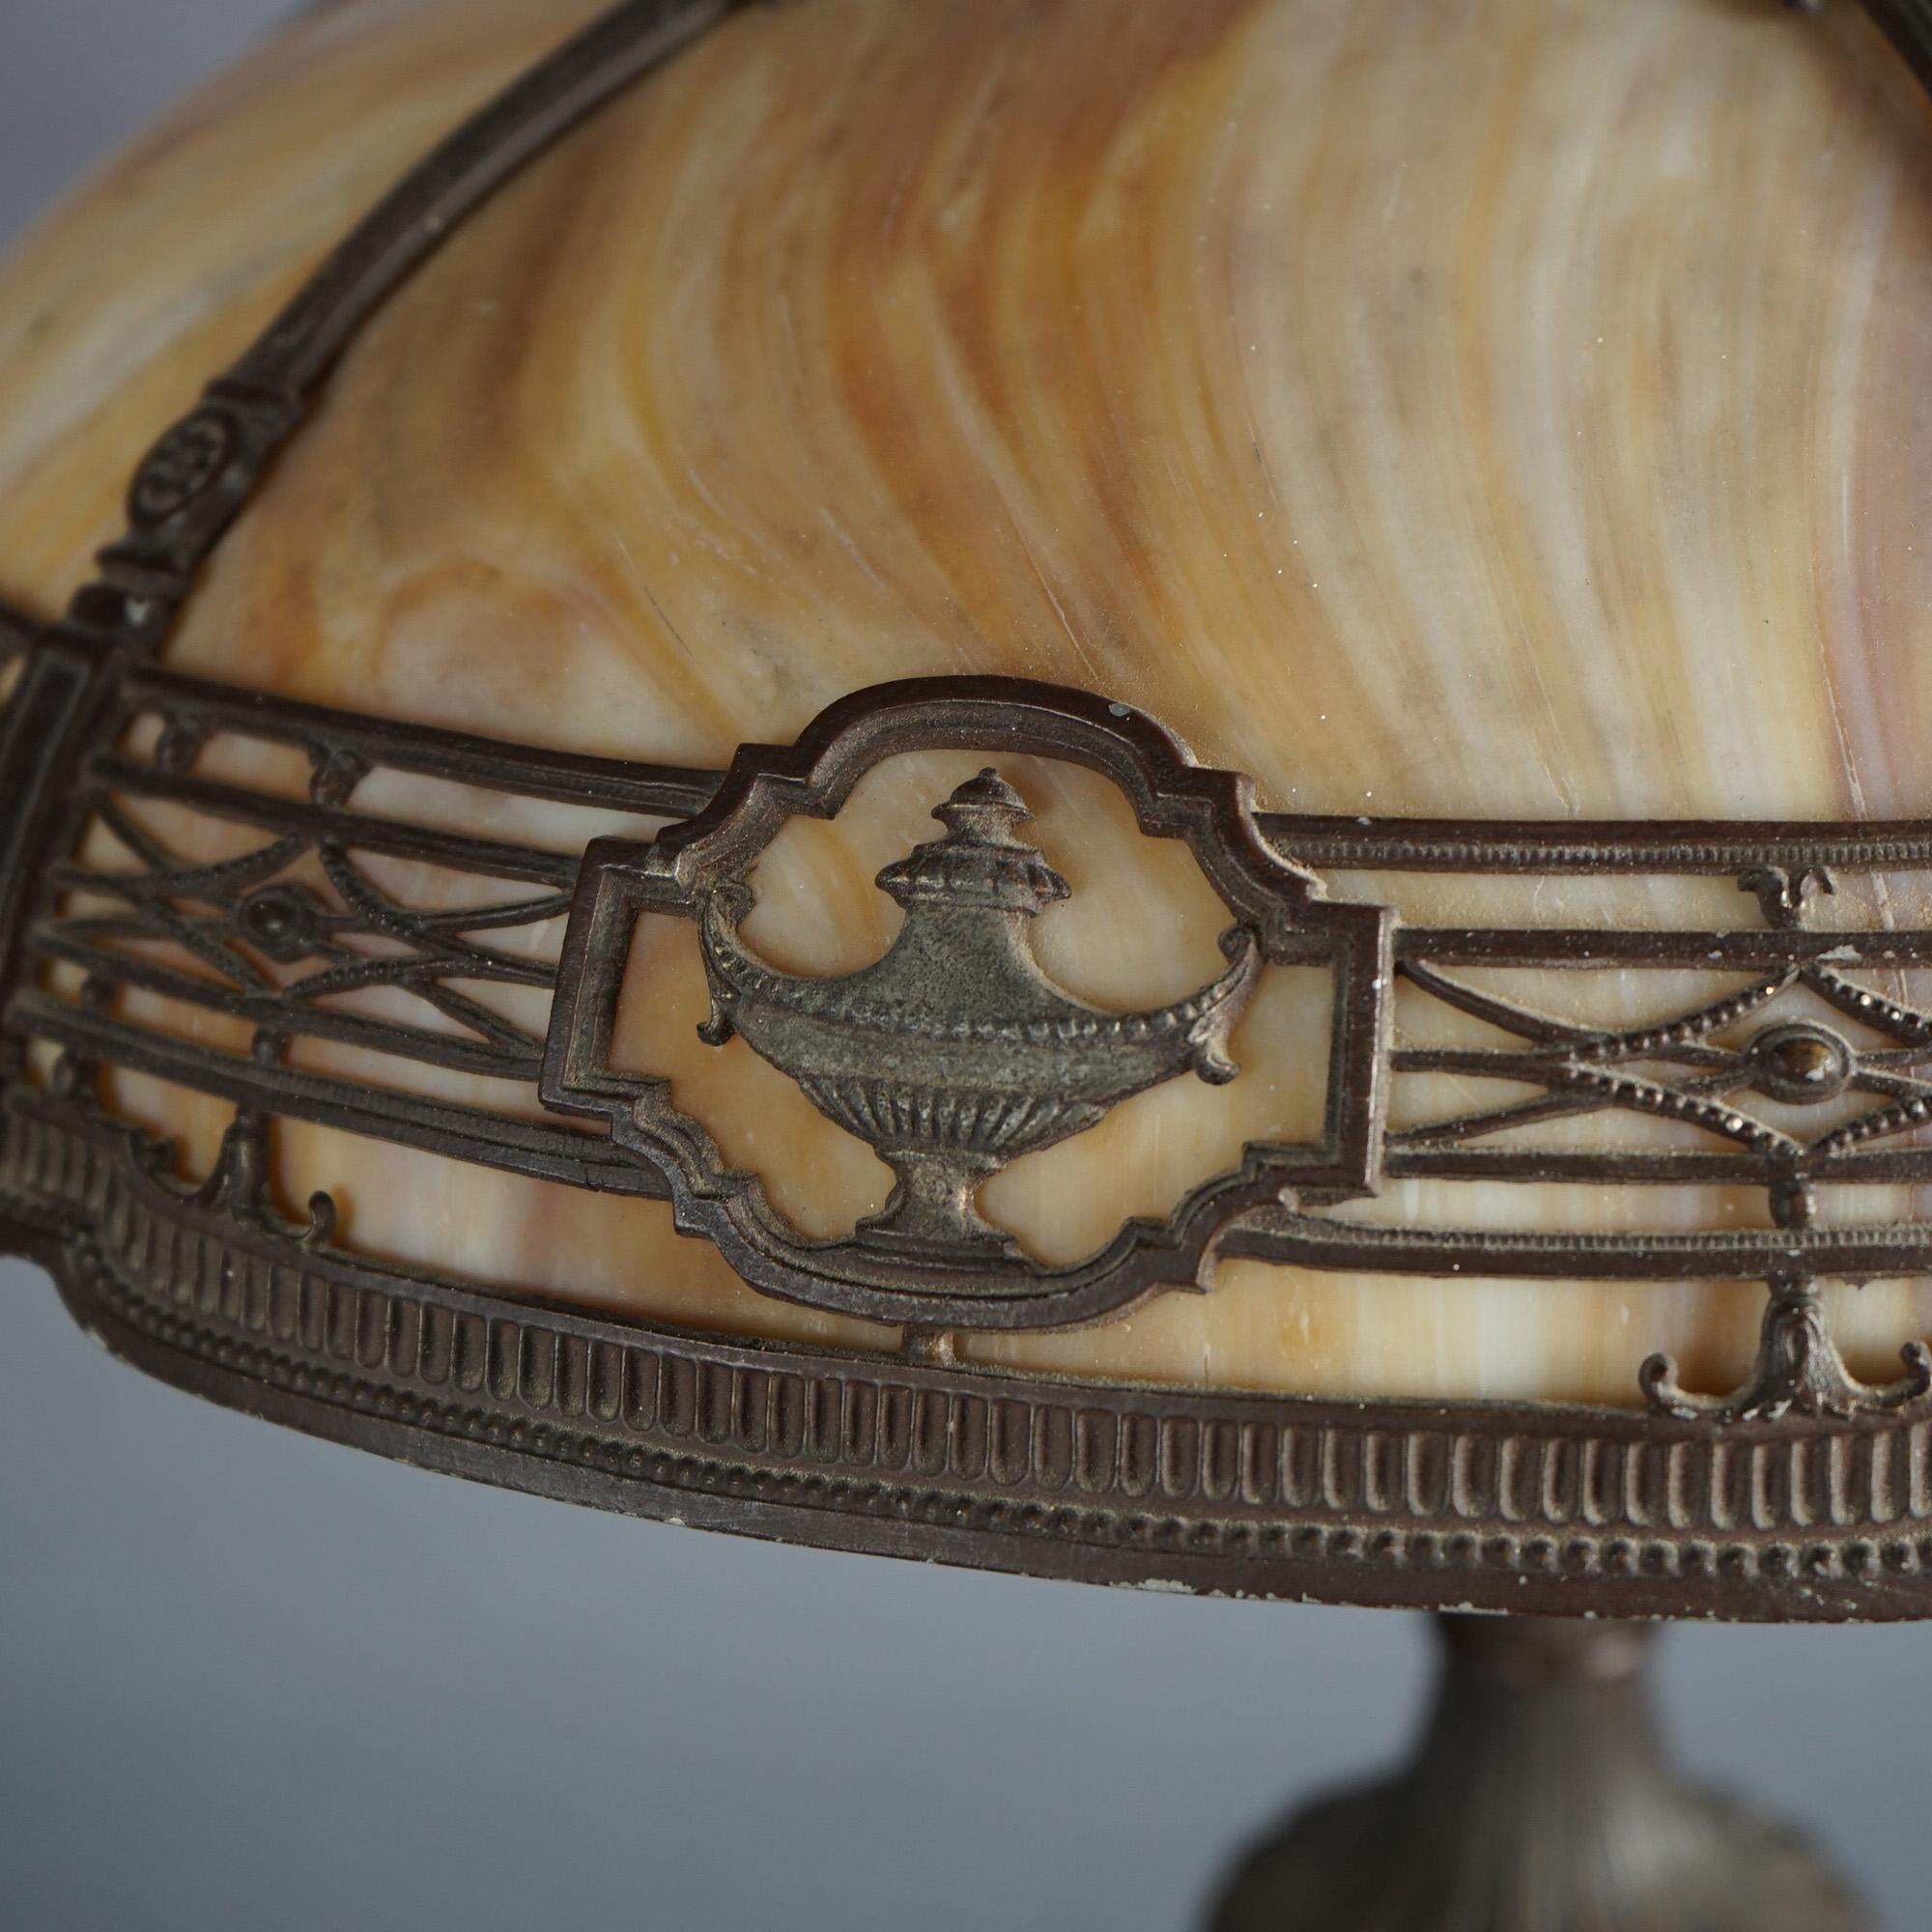 Antique Arts & Crafts Bradley & Hubbard Slag Glass Table Lamp Circa 1920 For Sale 2